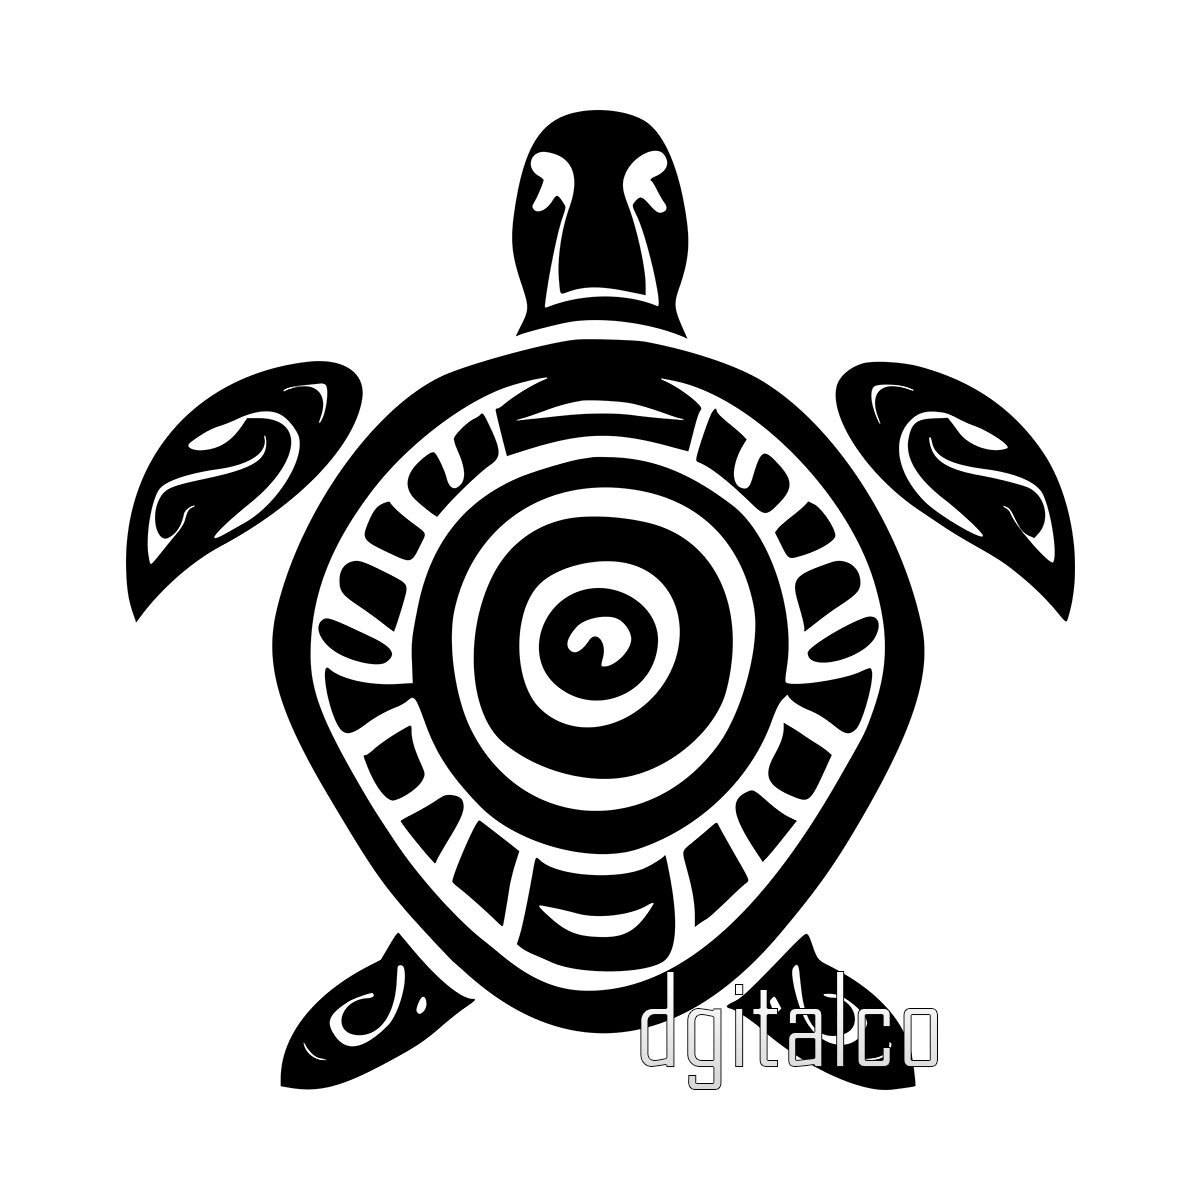 Space turtles tattoo by Jurgis Mikalauskas | Post 29443